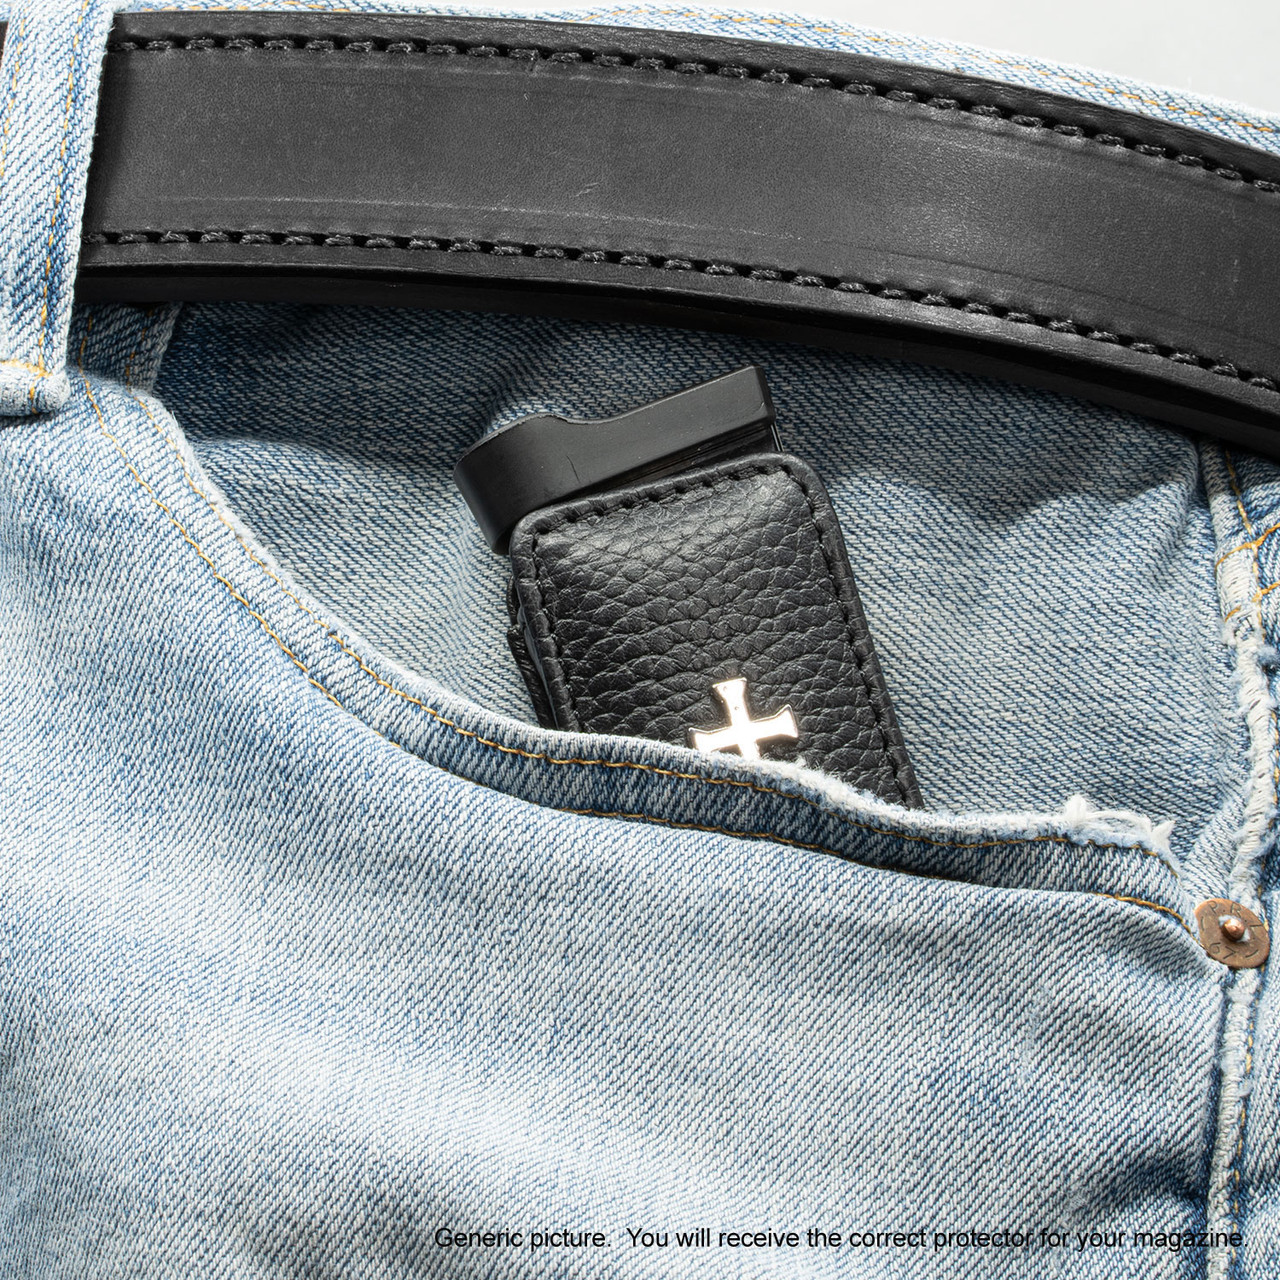 HK P2000SK Black Leather Cross Magazine Pocket Protector